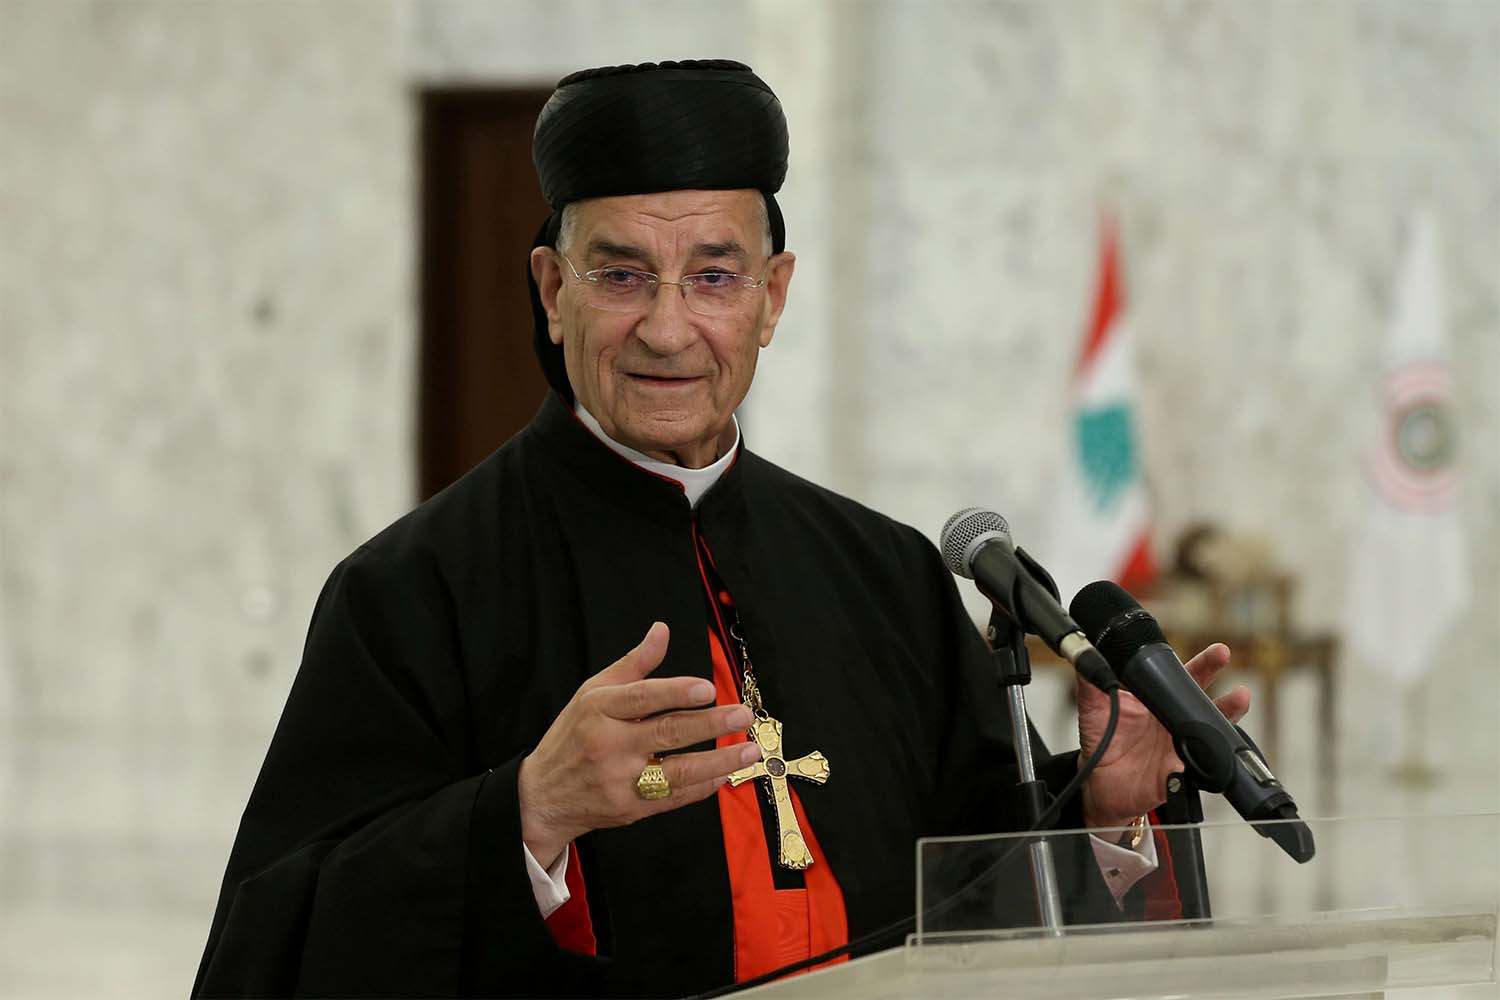 Patriarch Bechara said Adib's resignation had disappointed citizens